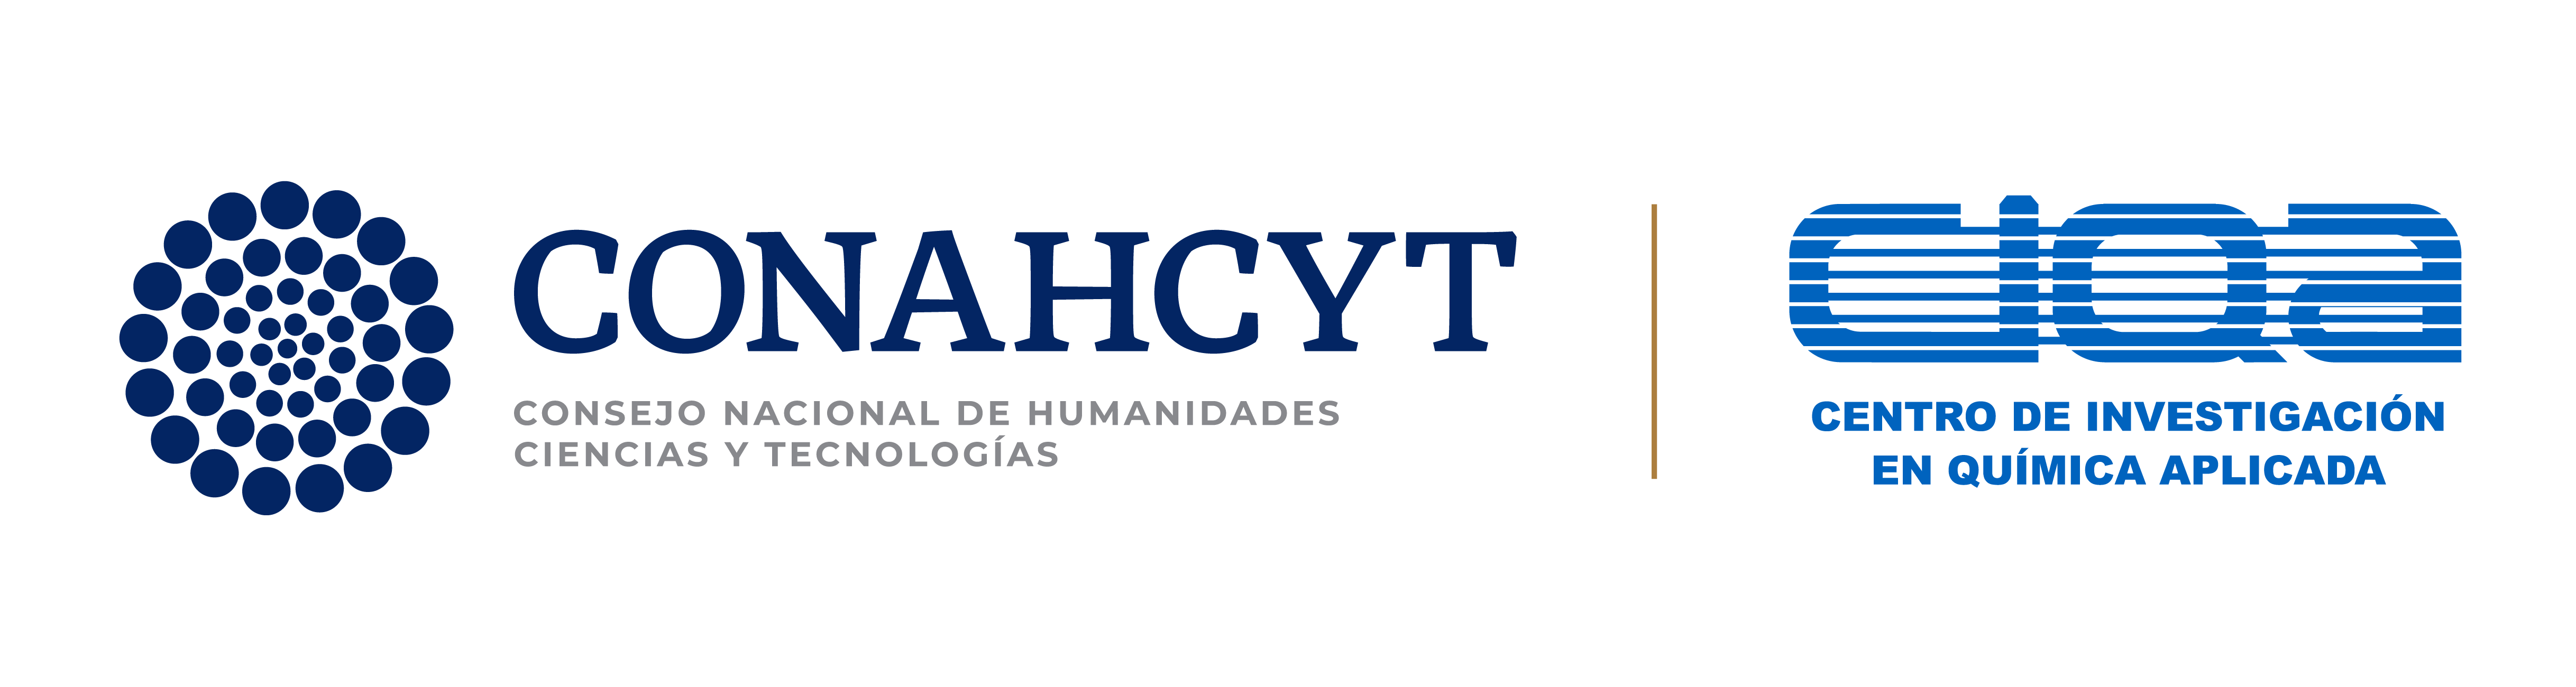 logos conahcyt-ciqa